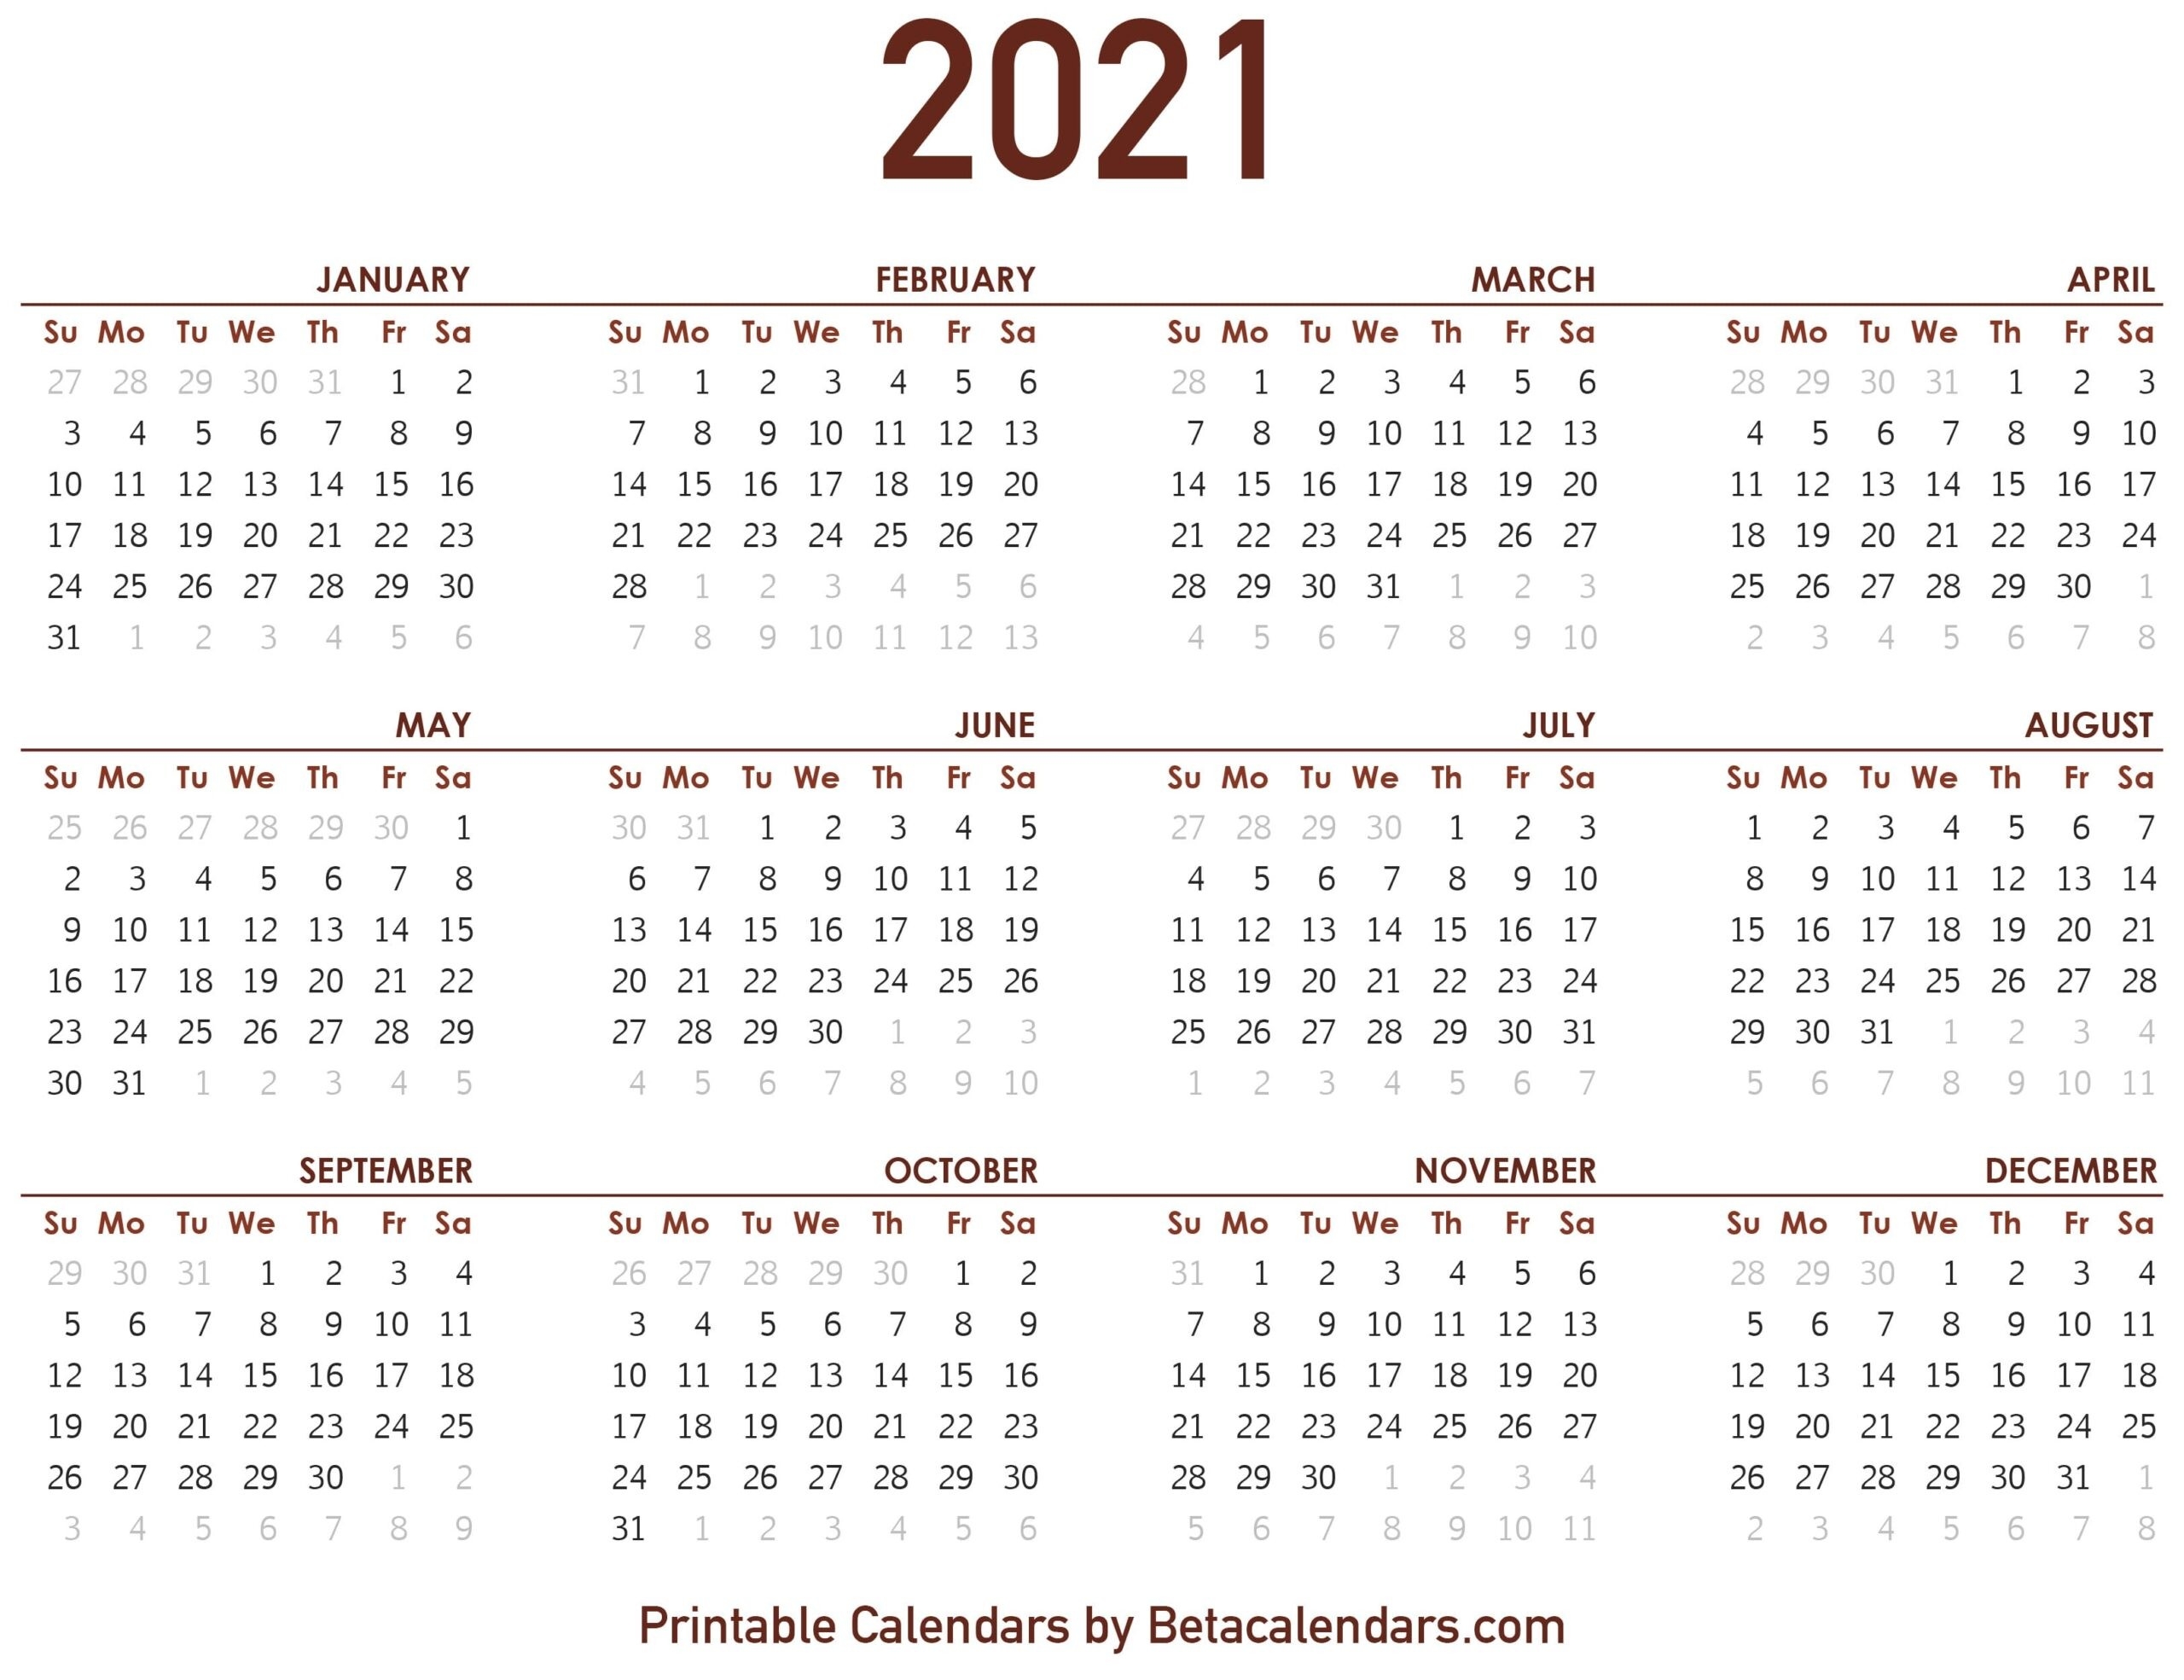 2021 Calendar - Beta Calendars-2021 Calendar Dates Print Off